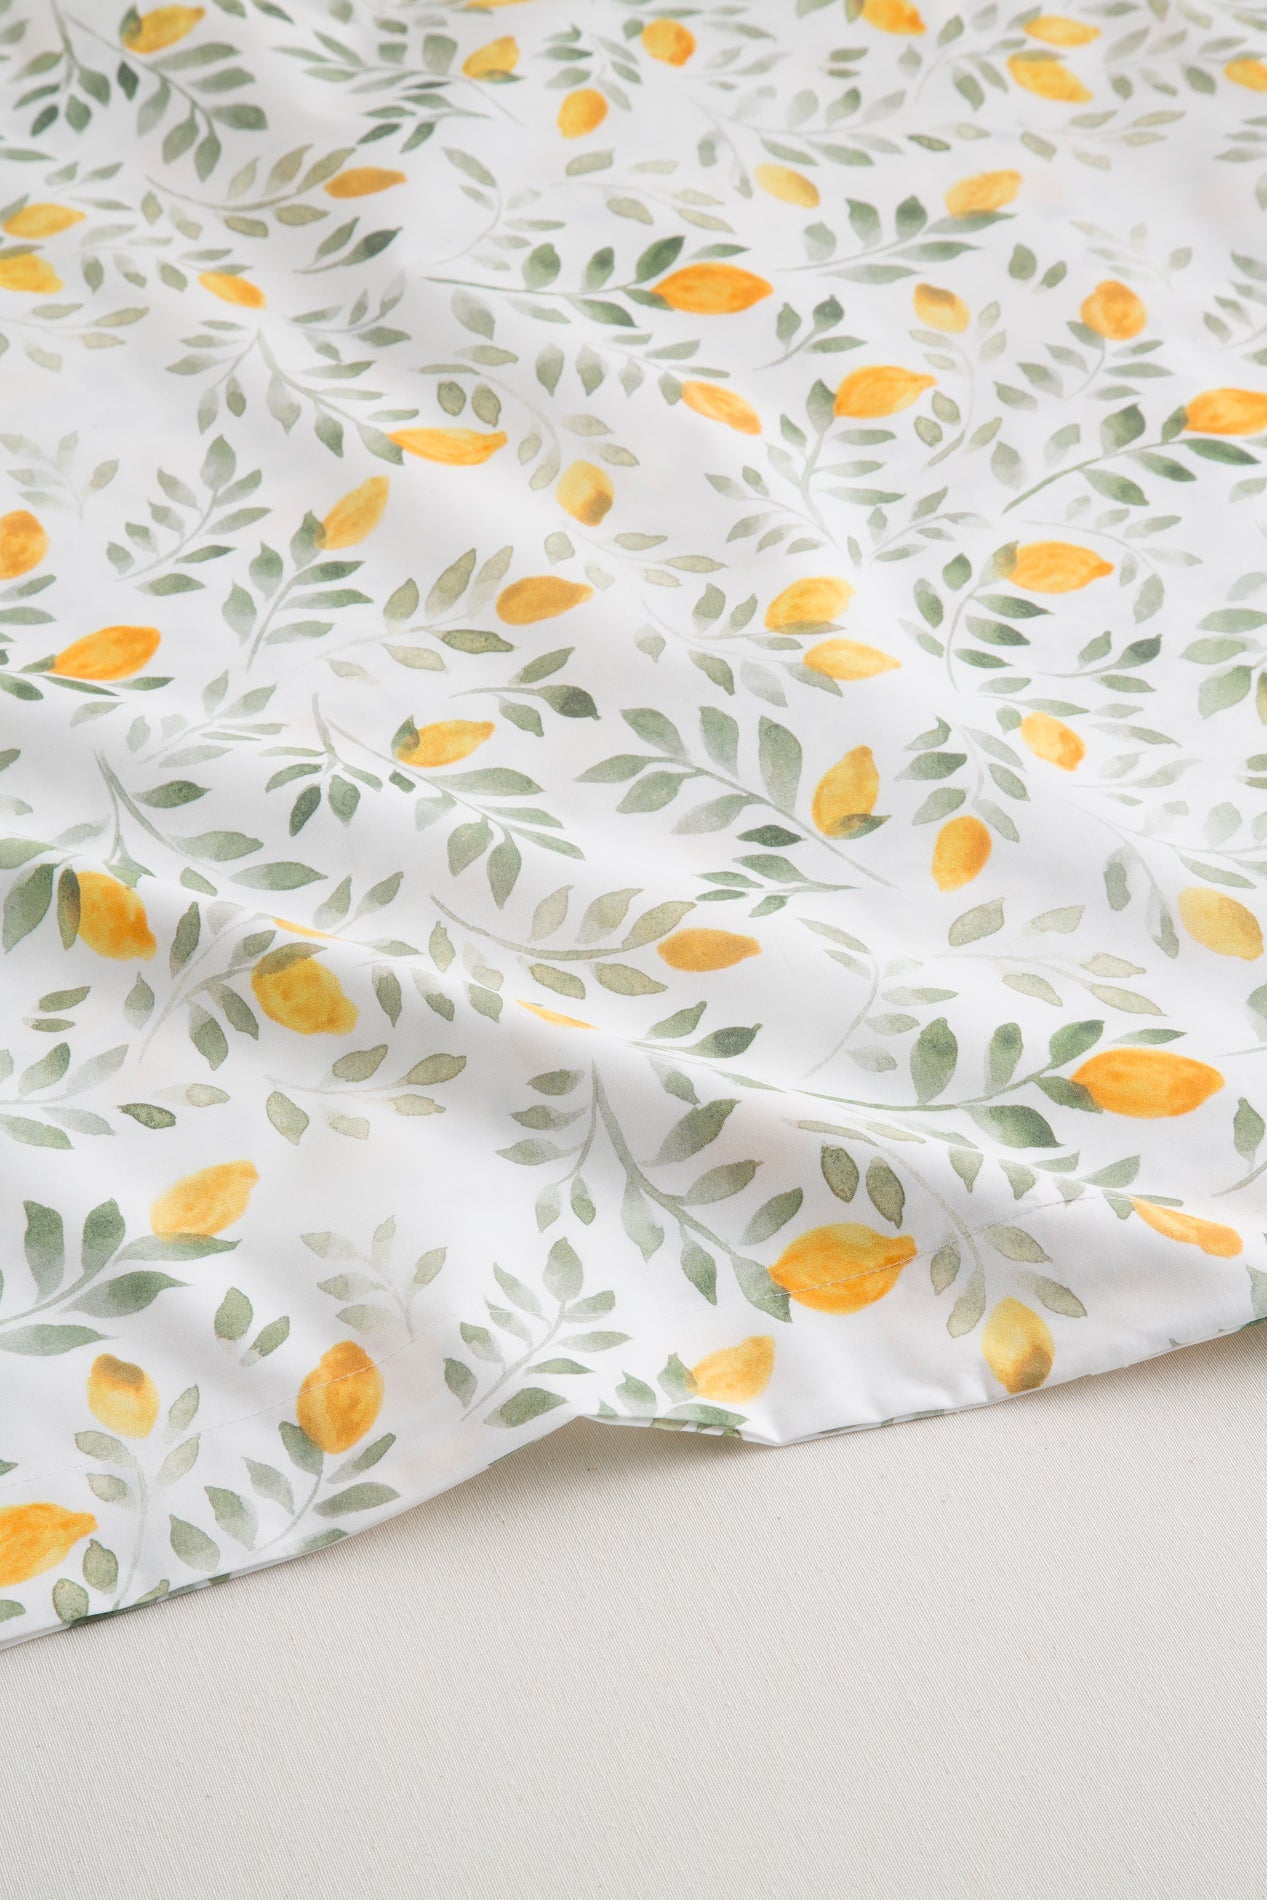 Percale Cotton Top Sheet 200h Bed 150 - Lemons